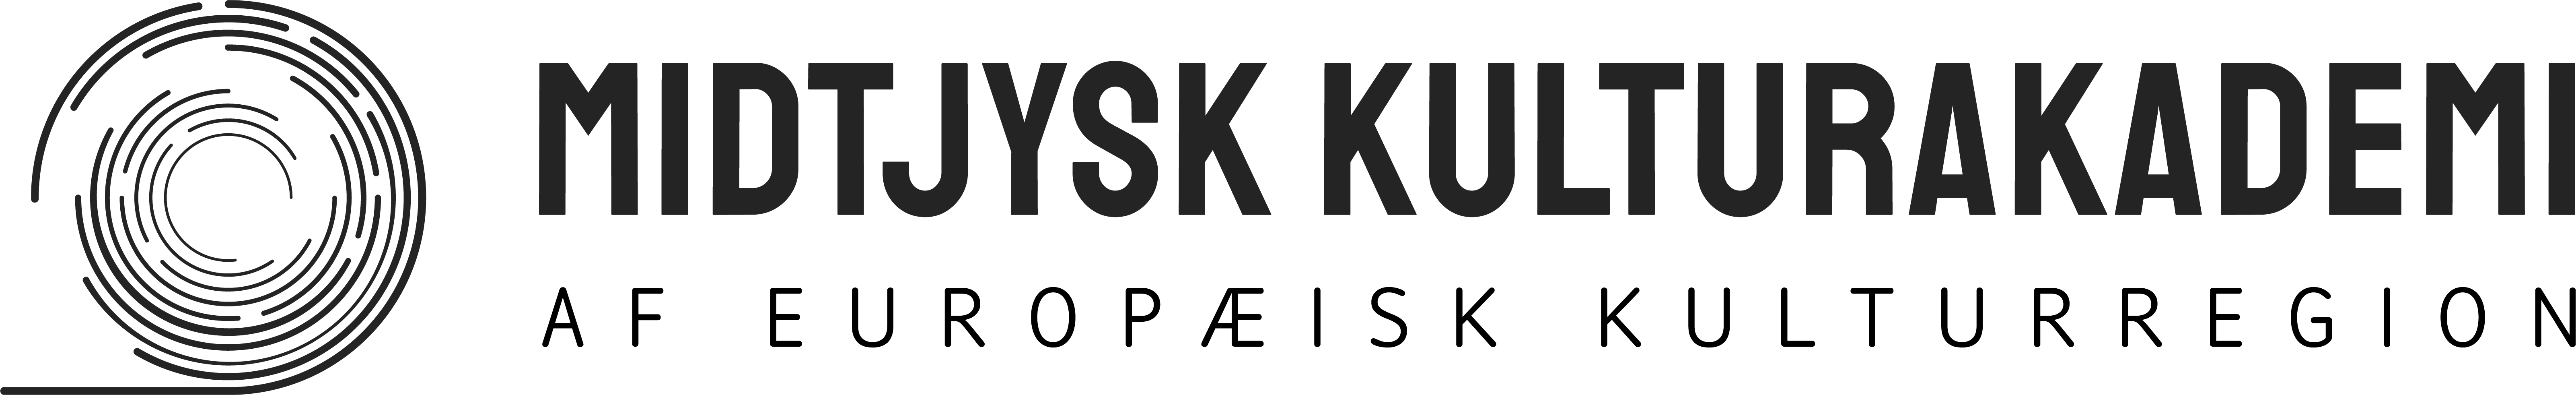 Midtjysk kulturakademi logo sort